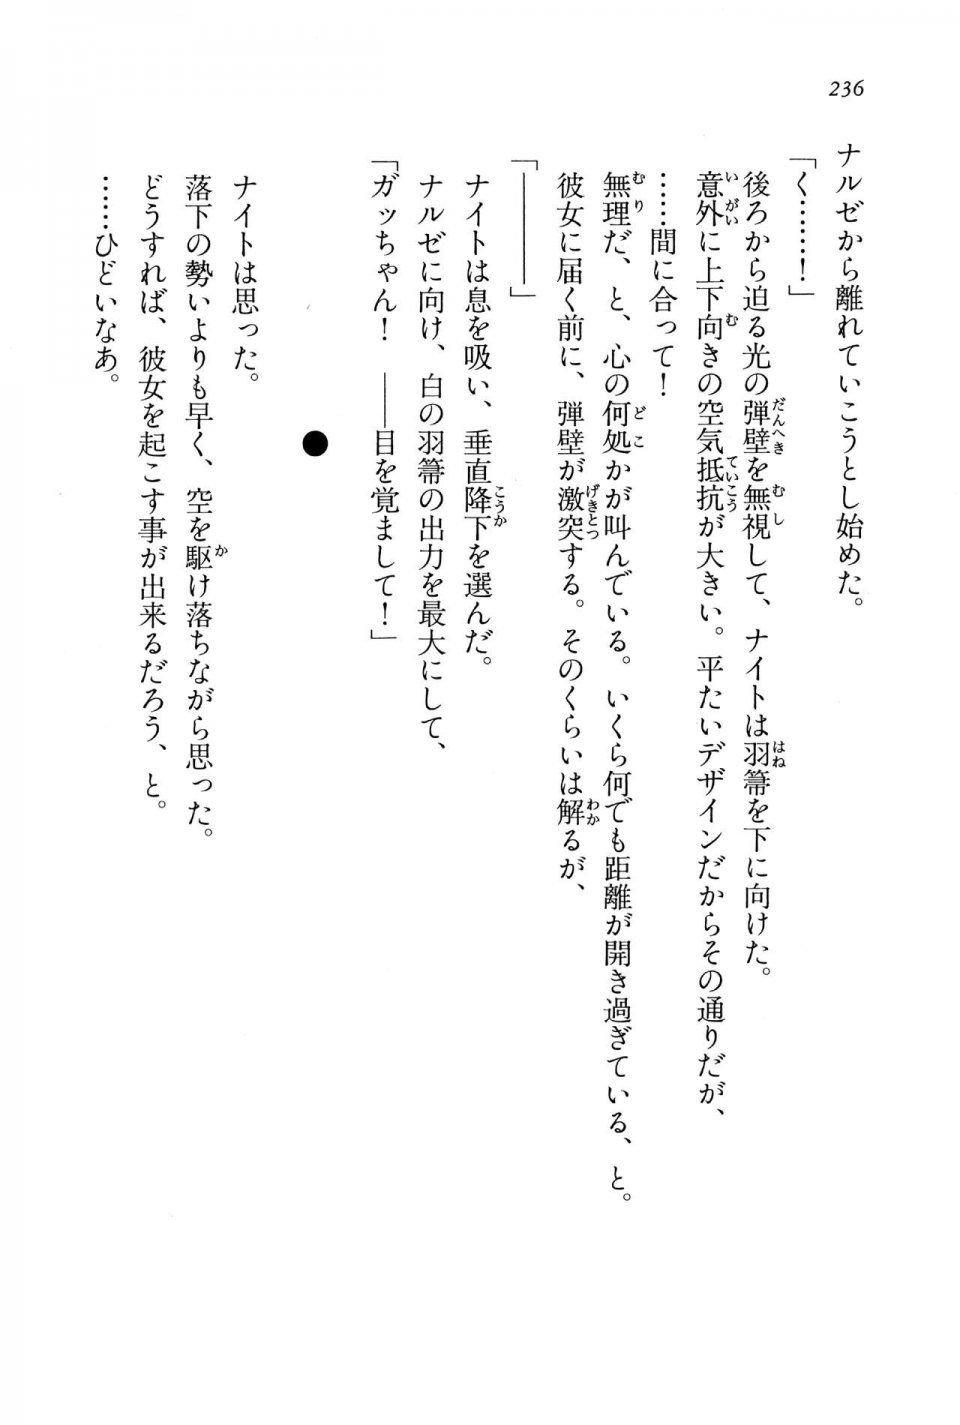 Kyoukai Senjou no Horizon BD Special Mininovel Vol 7(4A) - Photo #240